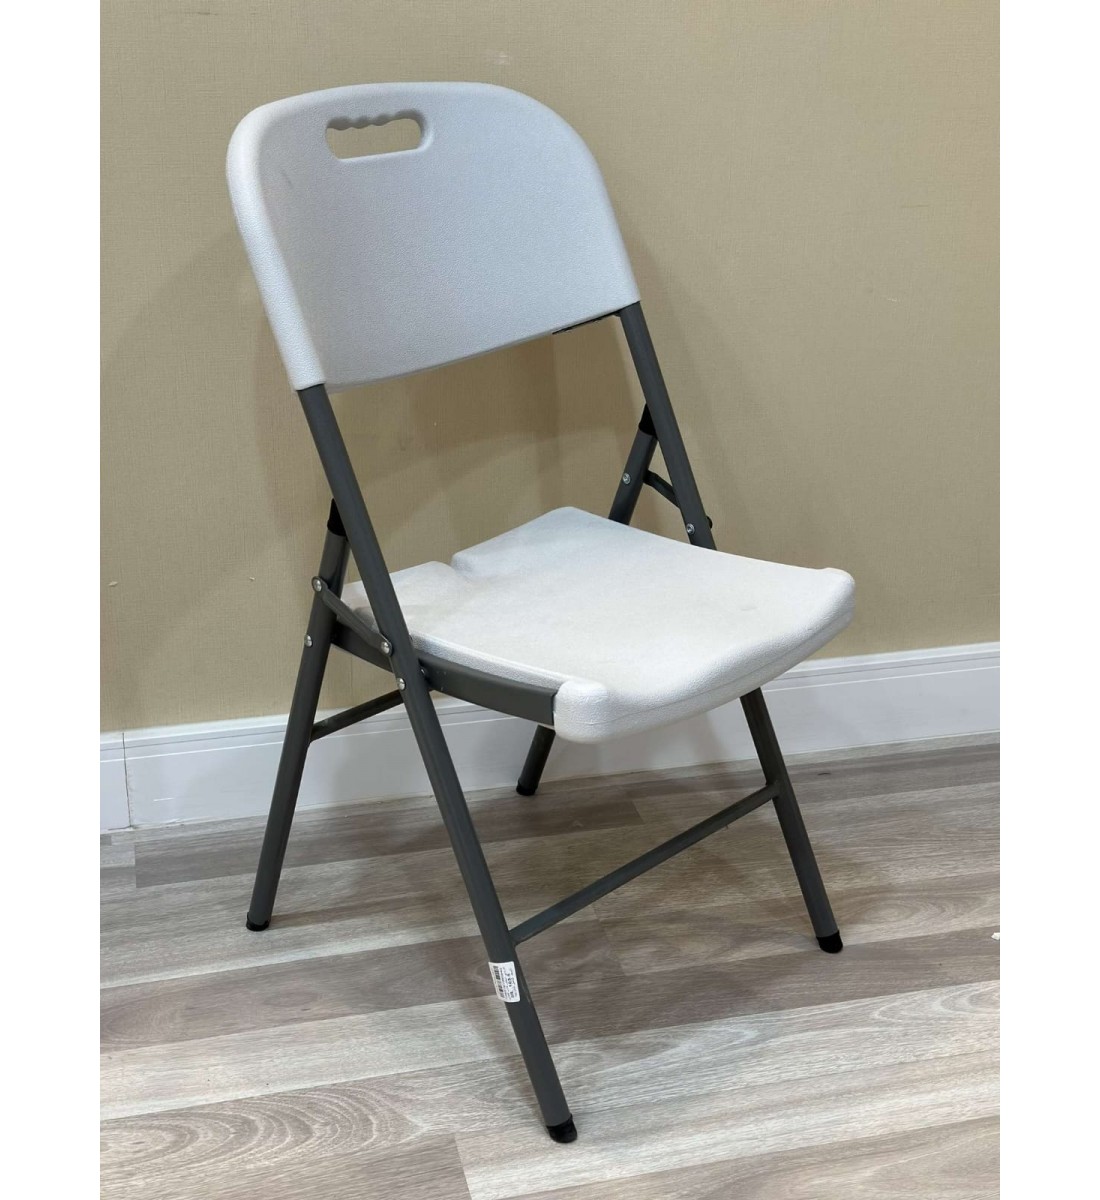 Fiber plastic chair 